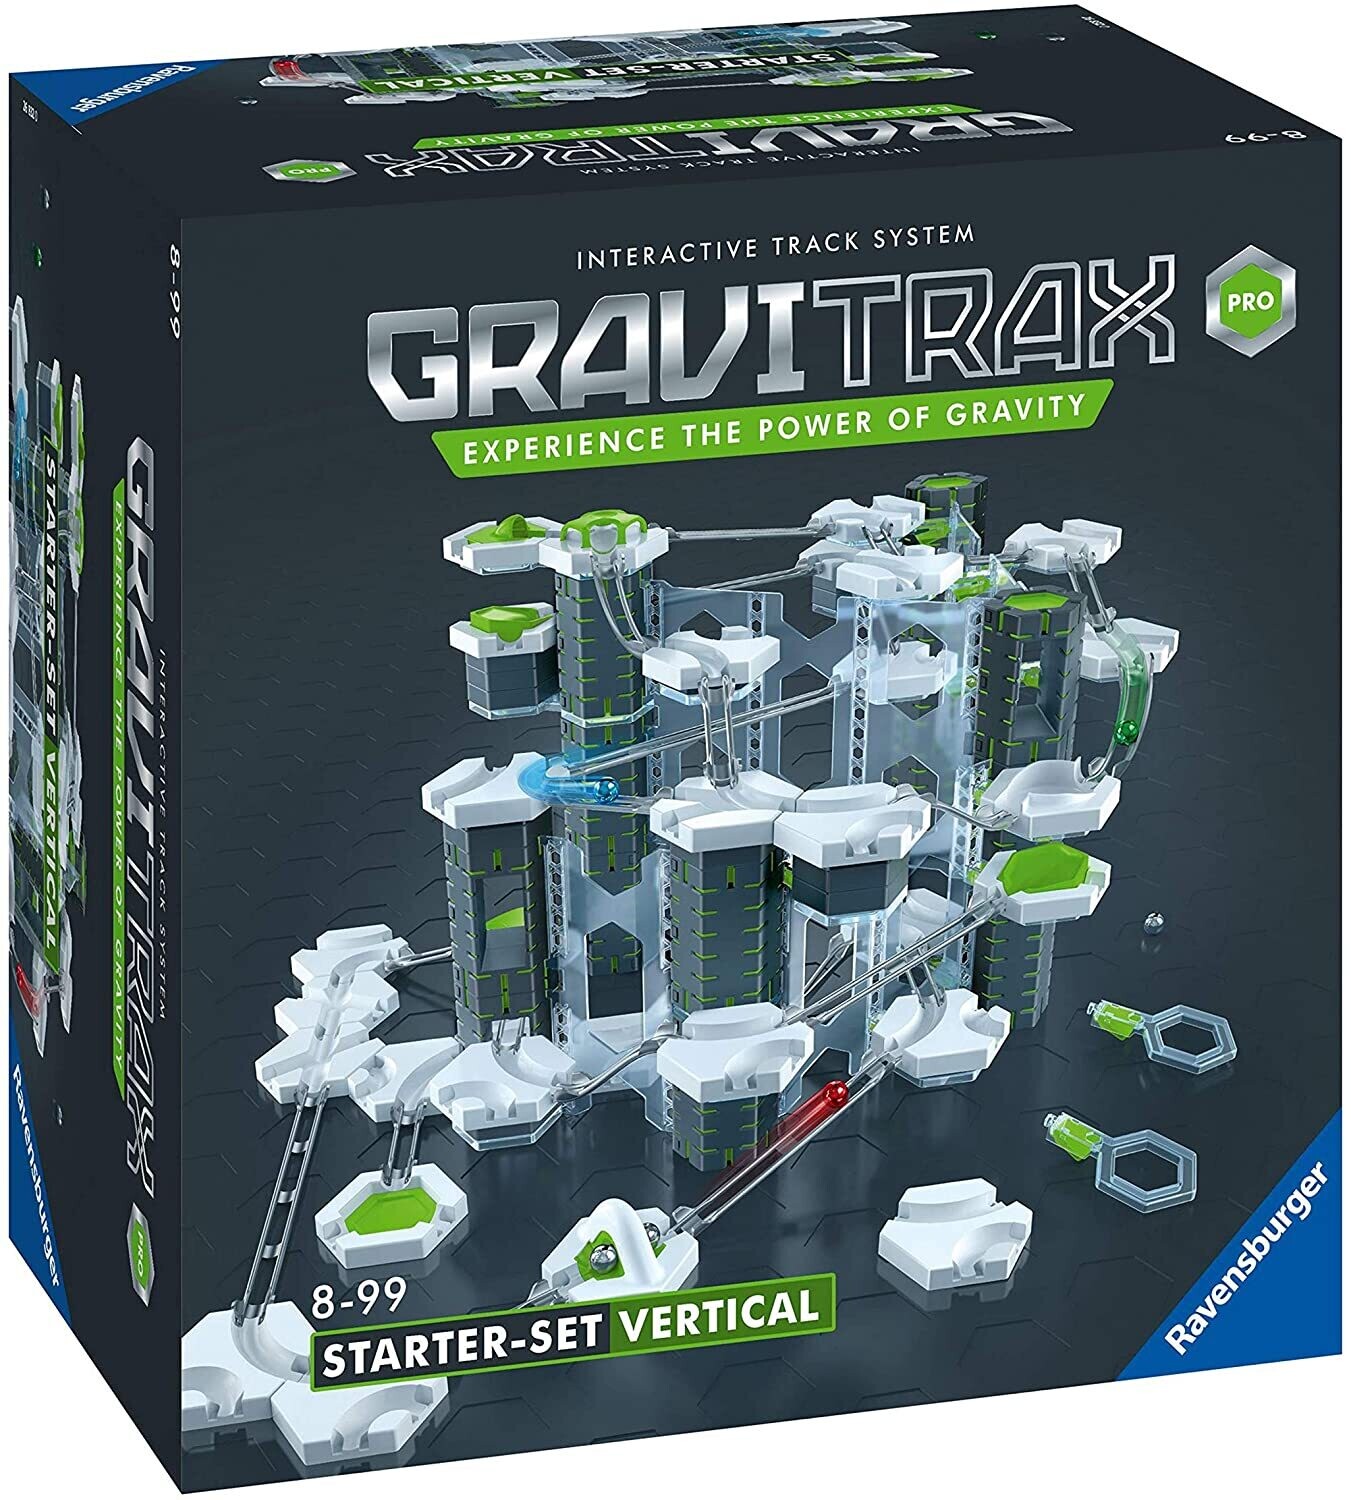 22426 Gravitrax Pro Starter Set Vertical